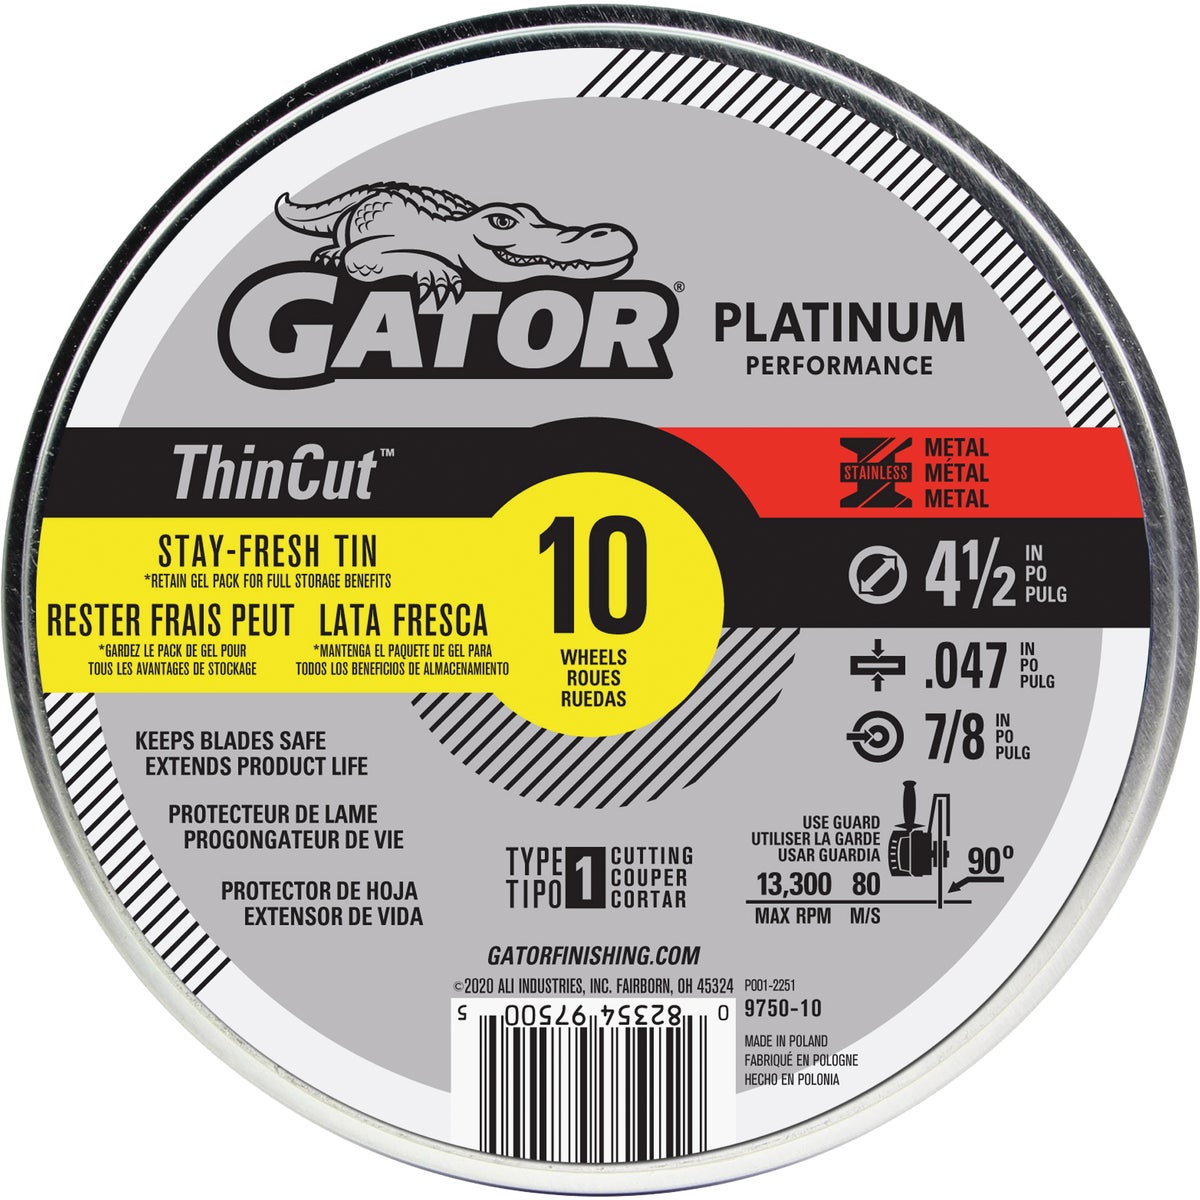 Gator 975010 Gator Blade ThinCut Type 1 4-1/2 In. x 0.047 In. x 7/8 In. Metal/Stainless Cut-Off Wheel (10-Pack) 975010